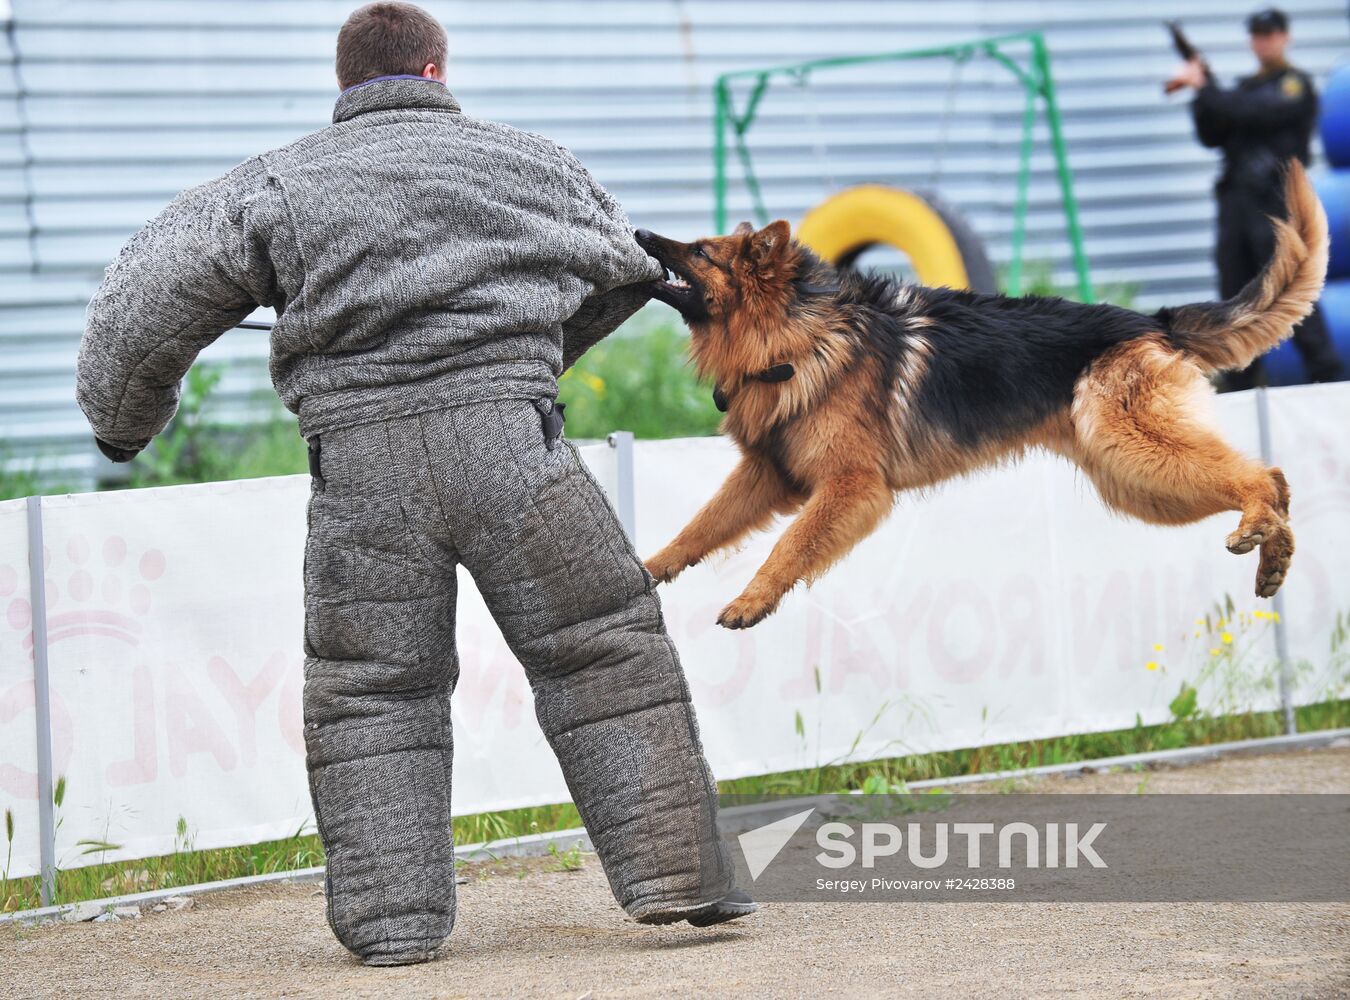 War dogs breeding school championship in Rostov-on-Don